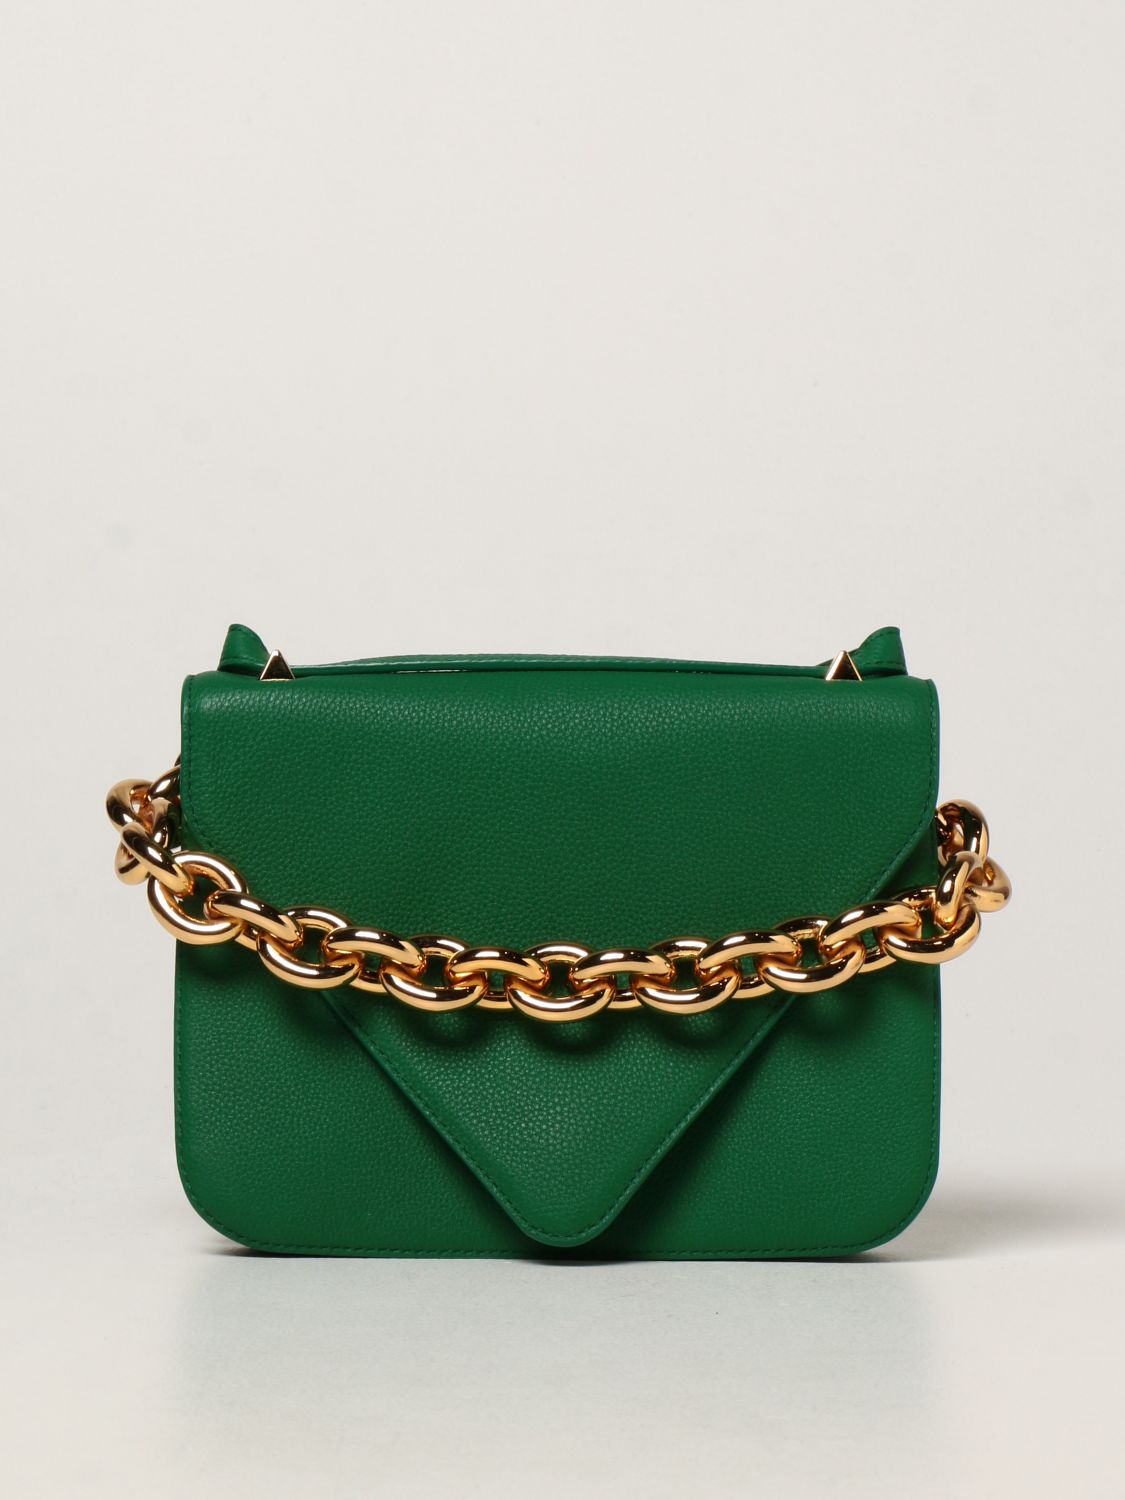 BOTTEGA VENETA: Mount bag in leather with chain detail - Green ...